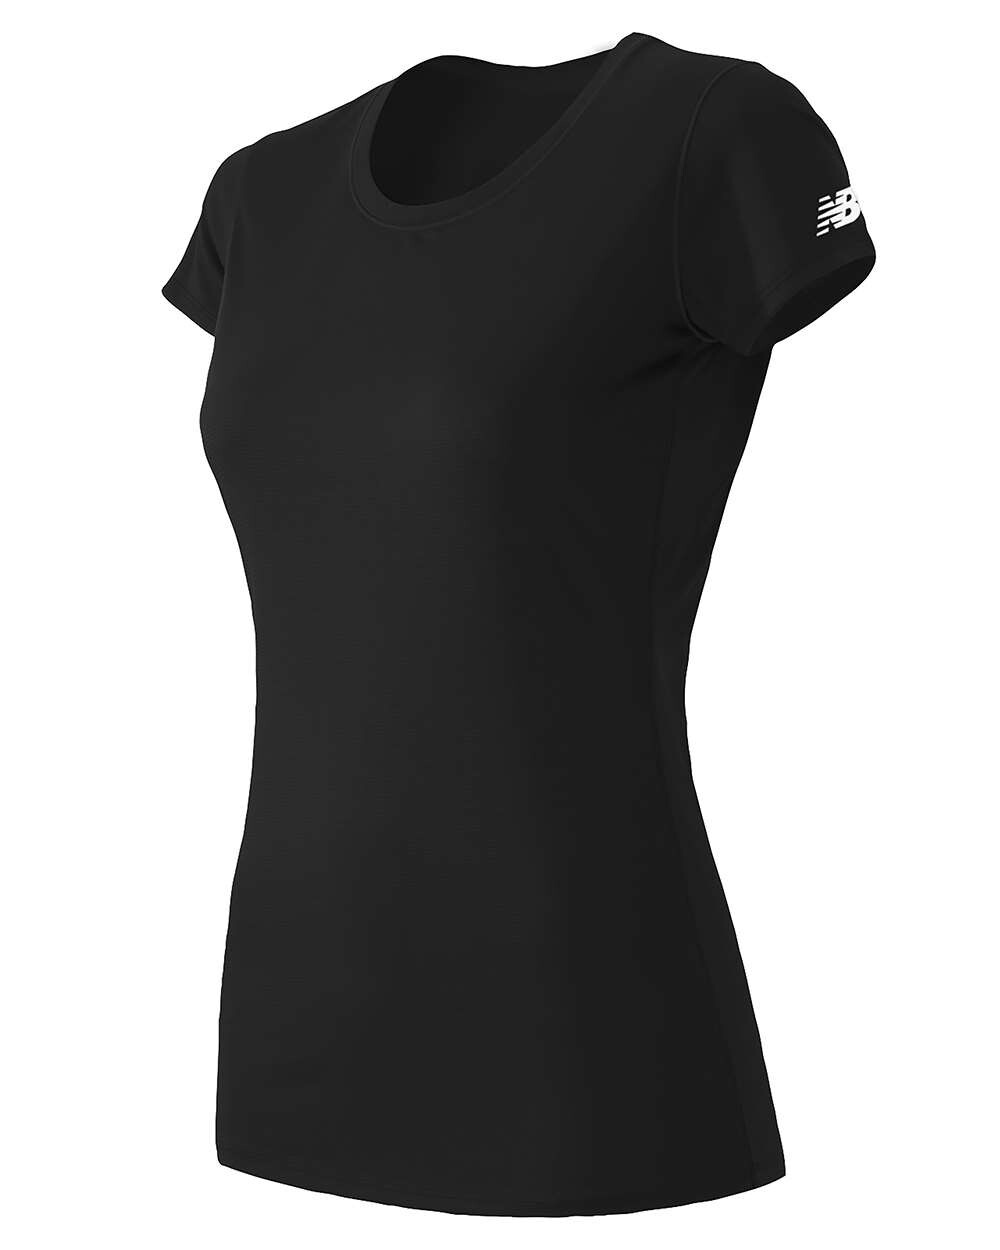 New Balance - Women's Performance T-Shirt